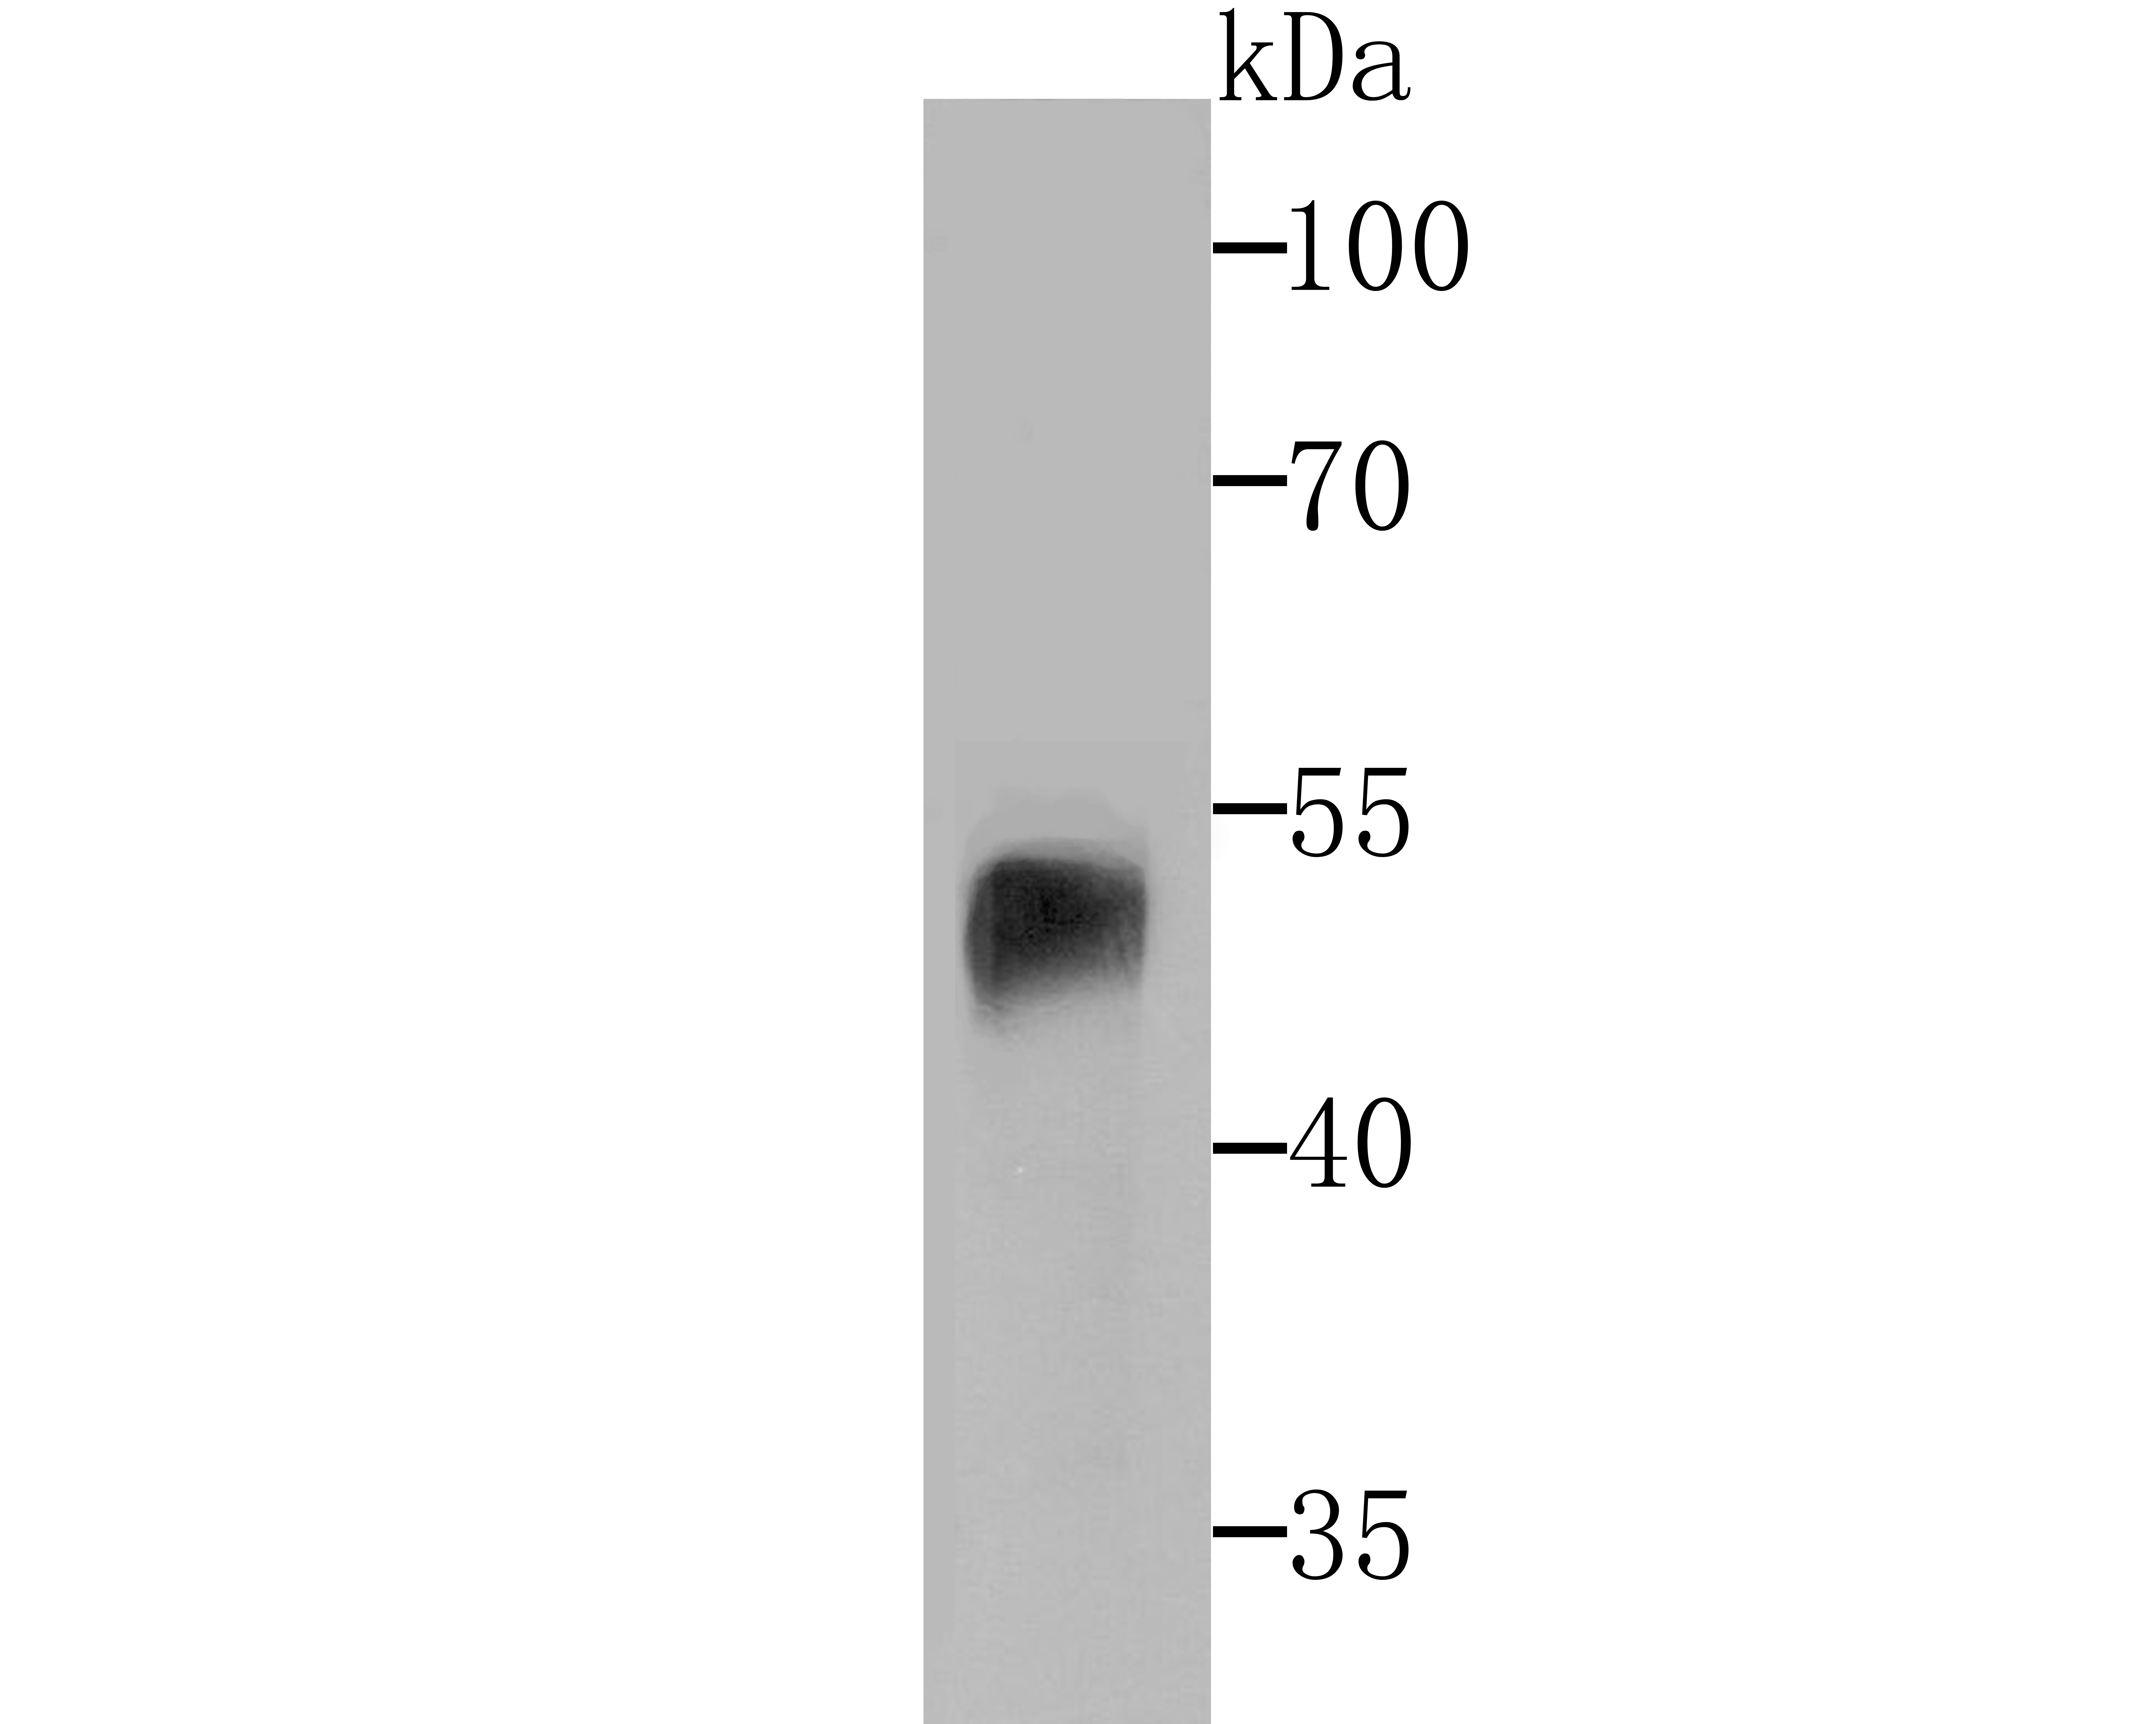 Western blot analysis of beta Arrestin 1 on human placenta tissue lysate using anti-beta Arrestin 1 antibody at 1/500 dilution.